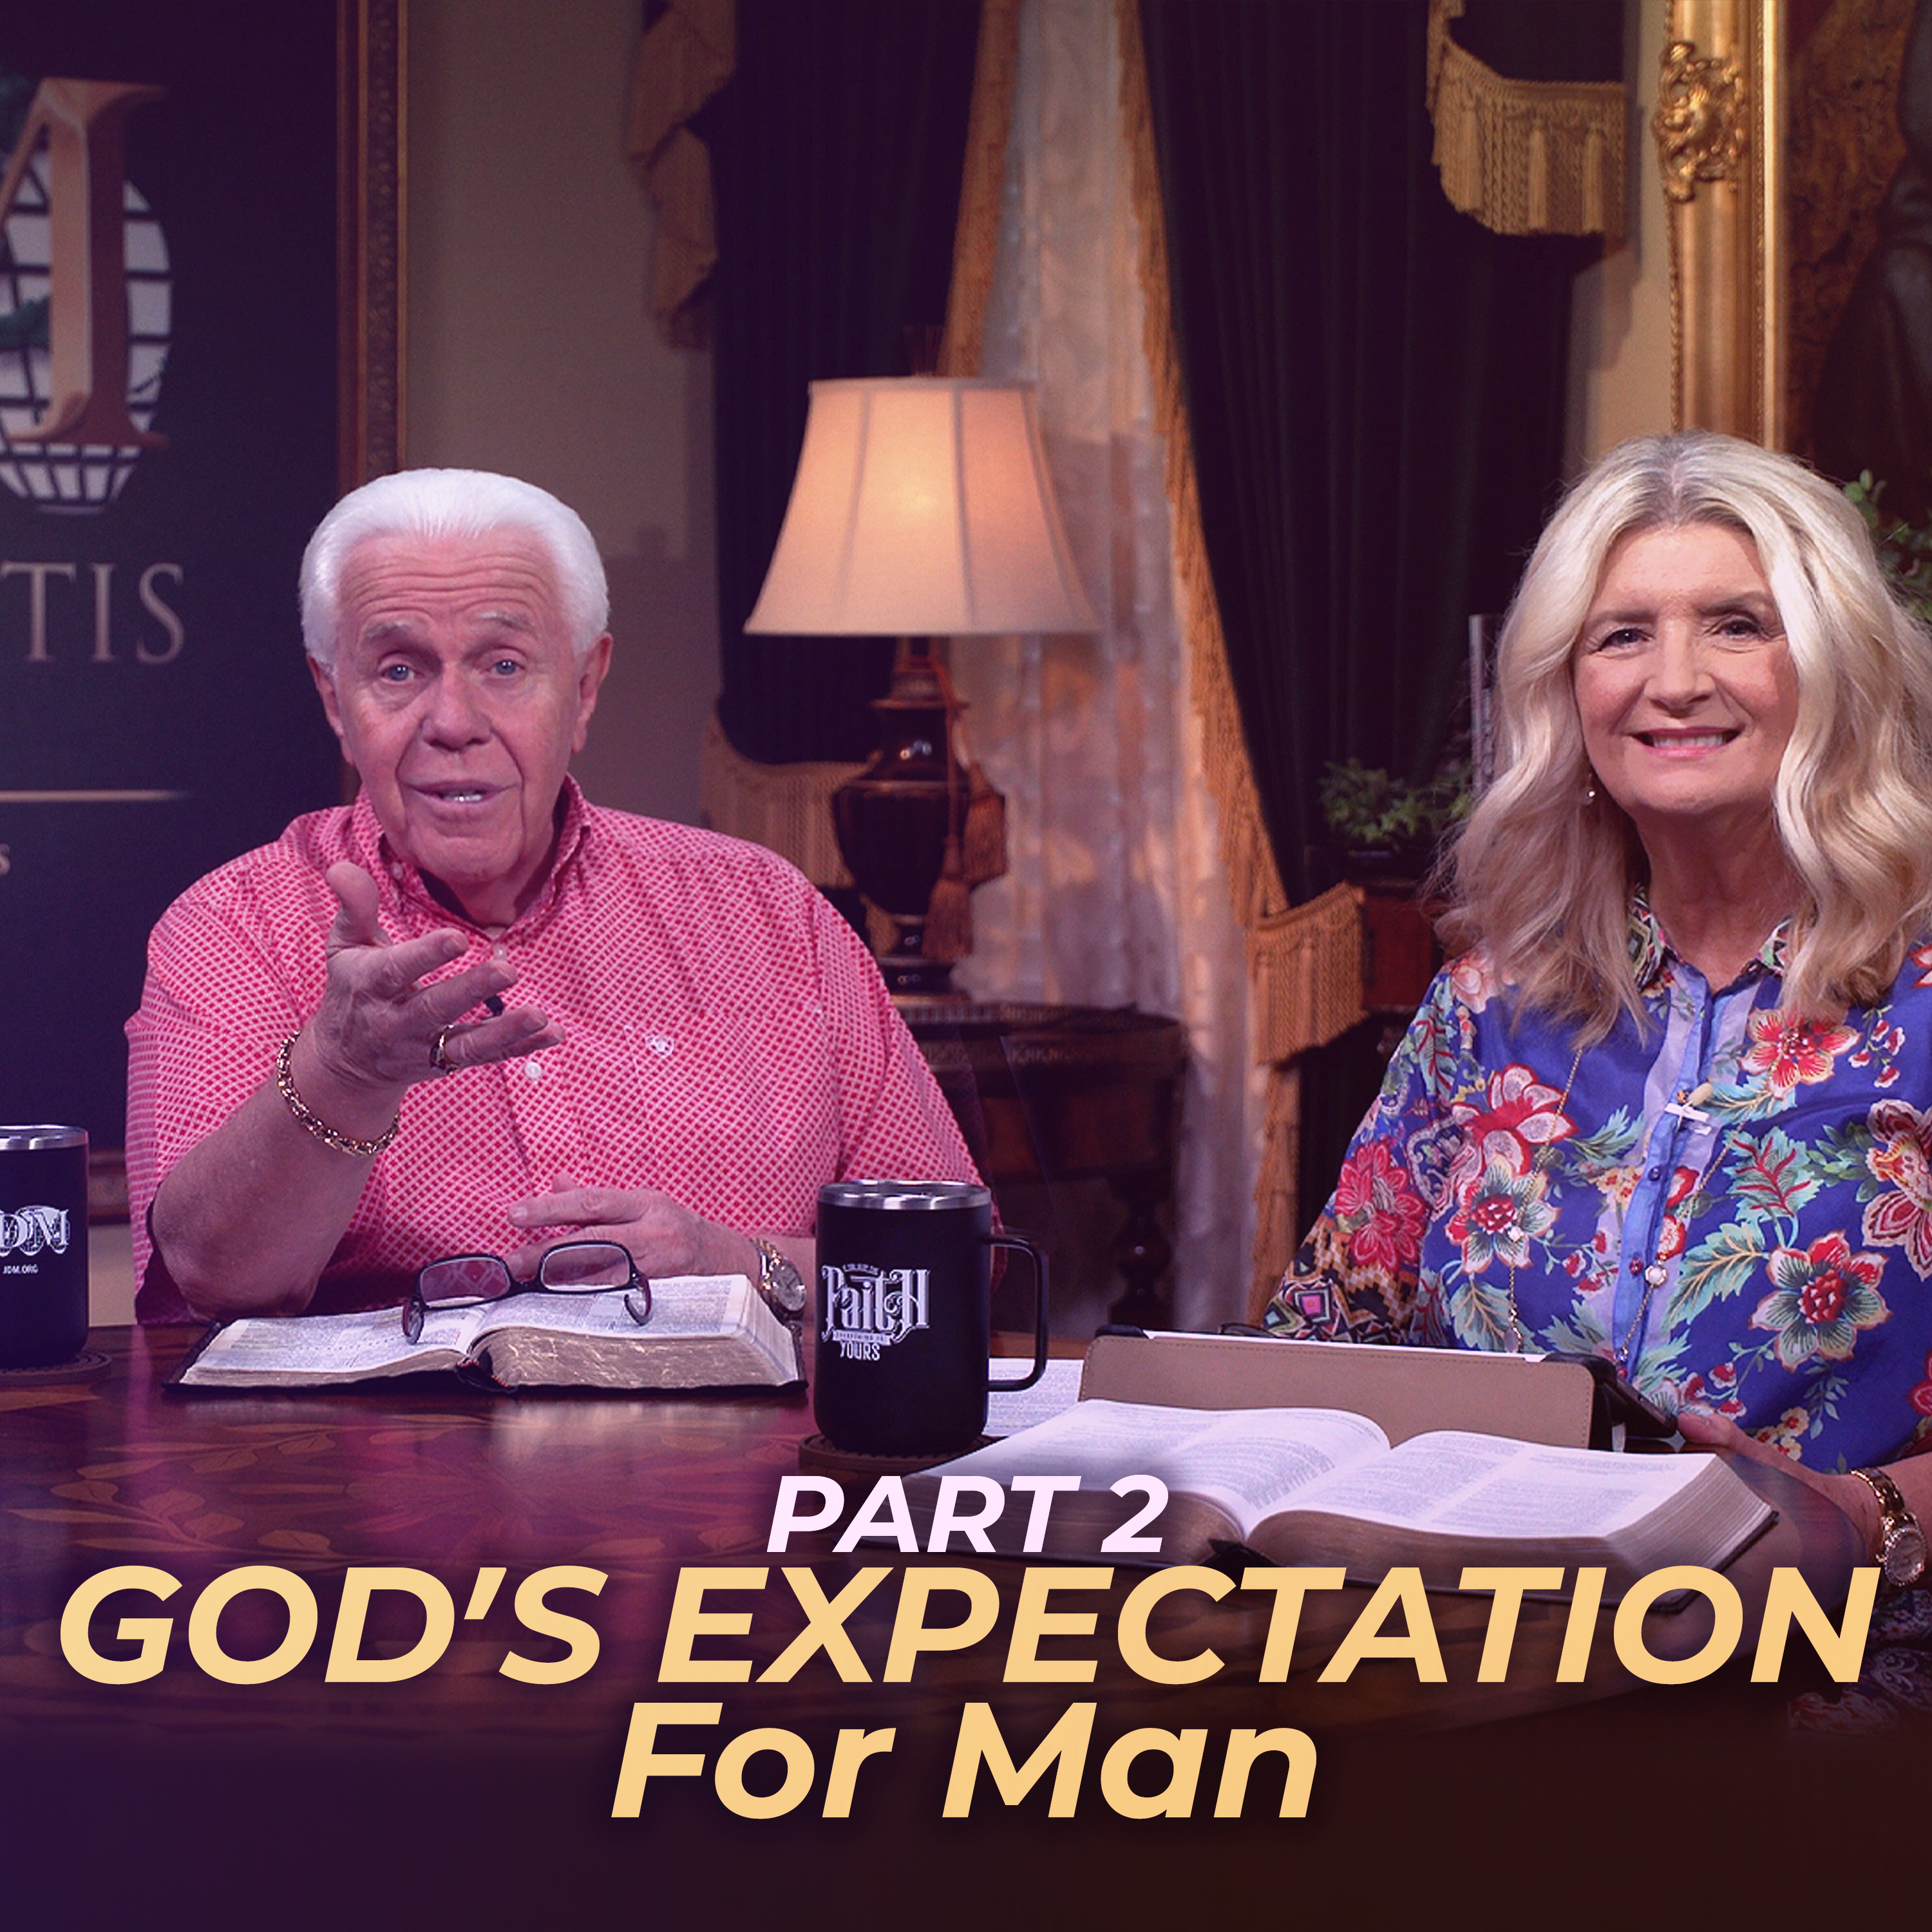  God’s Expectation For Man, Part 2